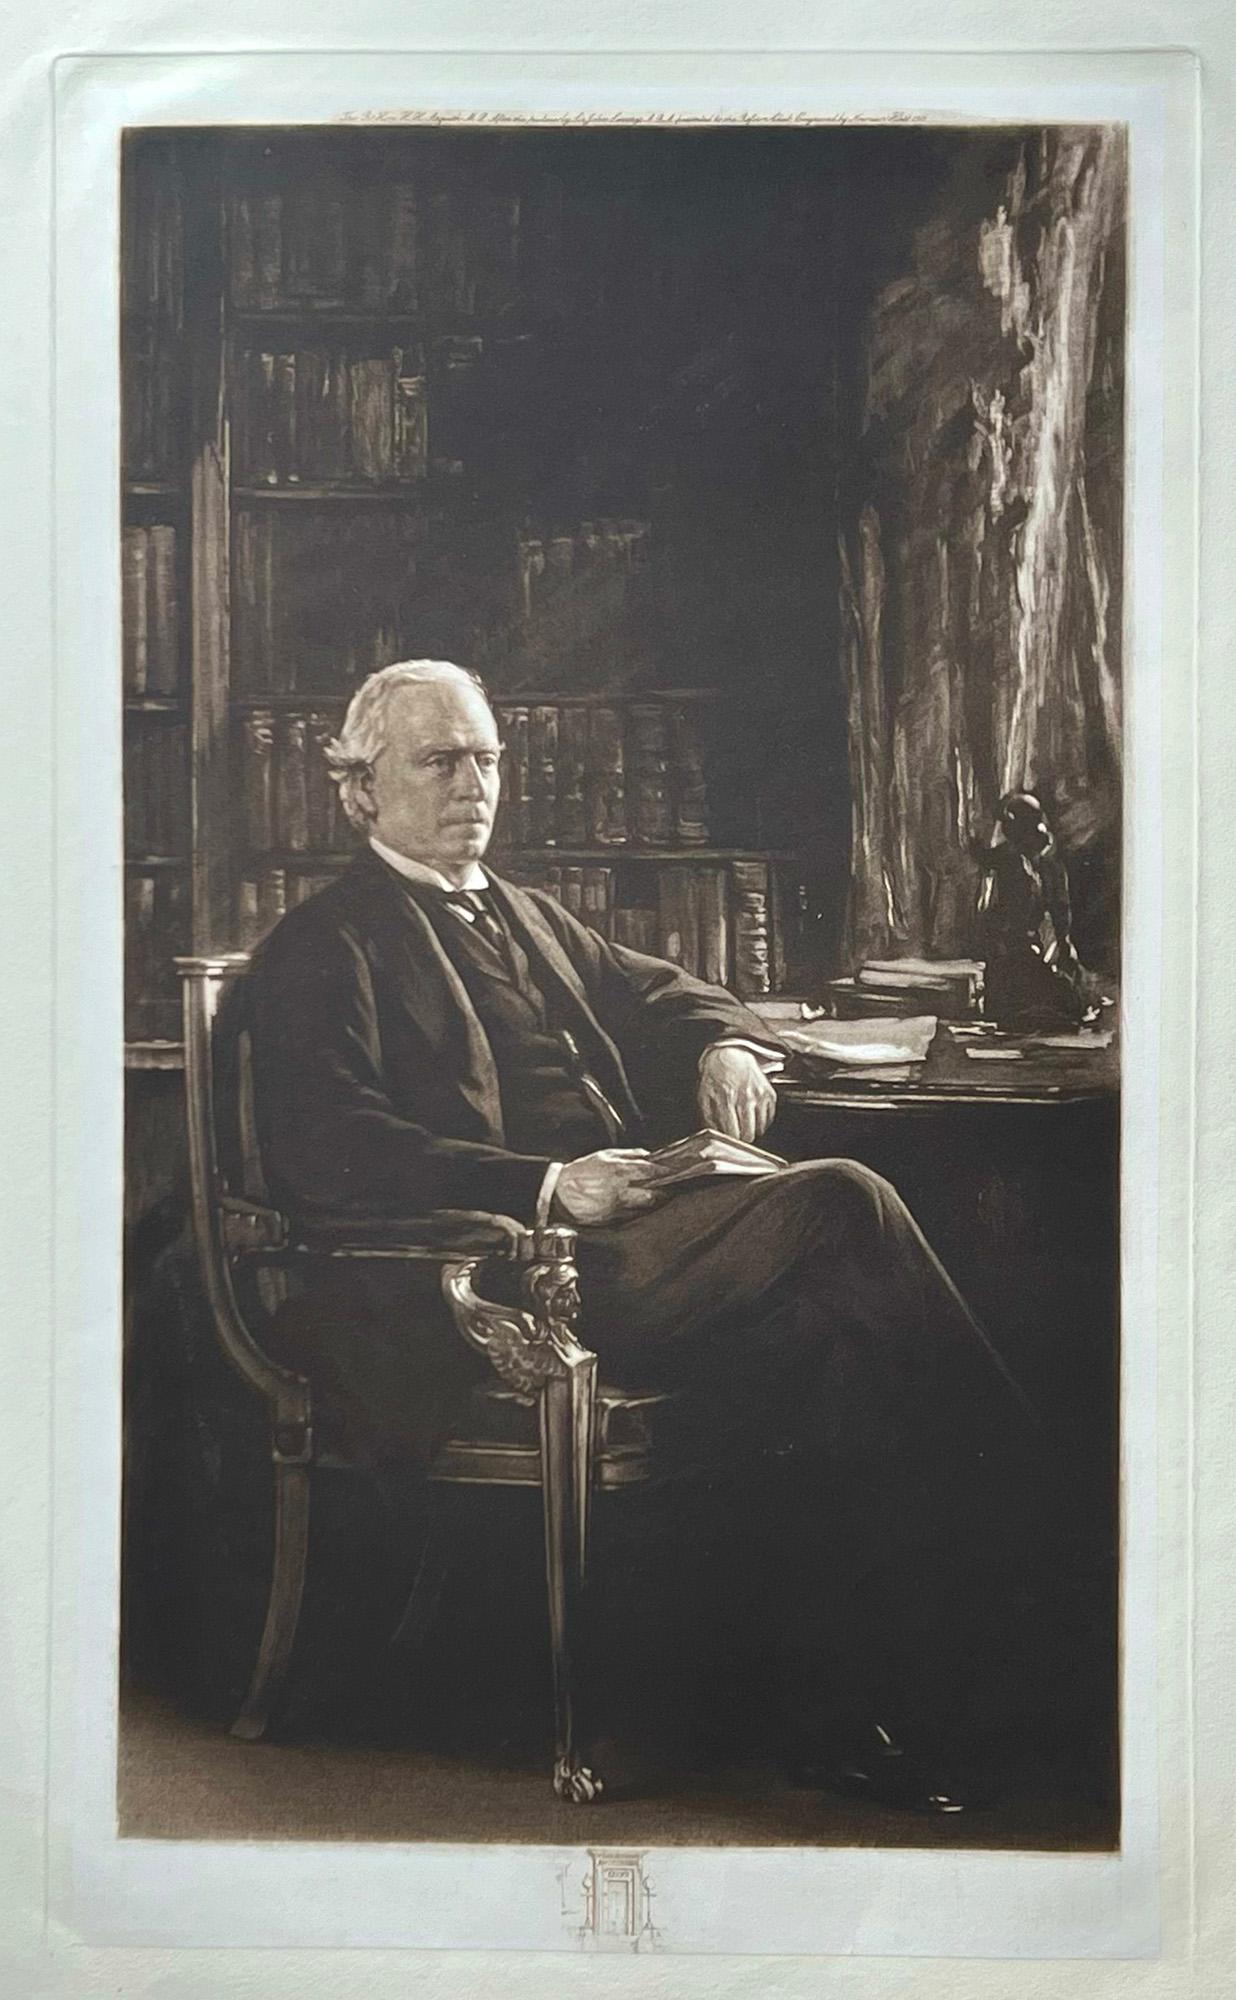 Sir John Lavery Figurative Print - The Right Hon Henry Herbert Asquith, Prime Minister, portrait engraving 